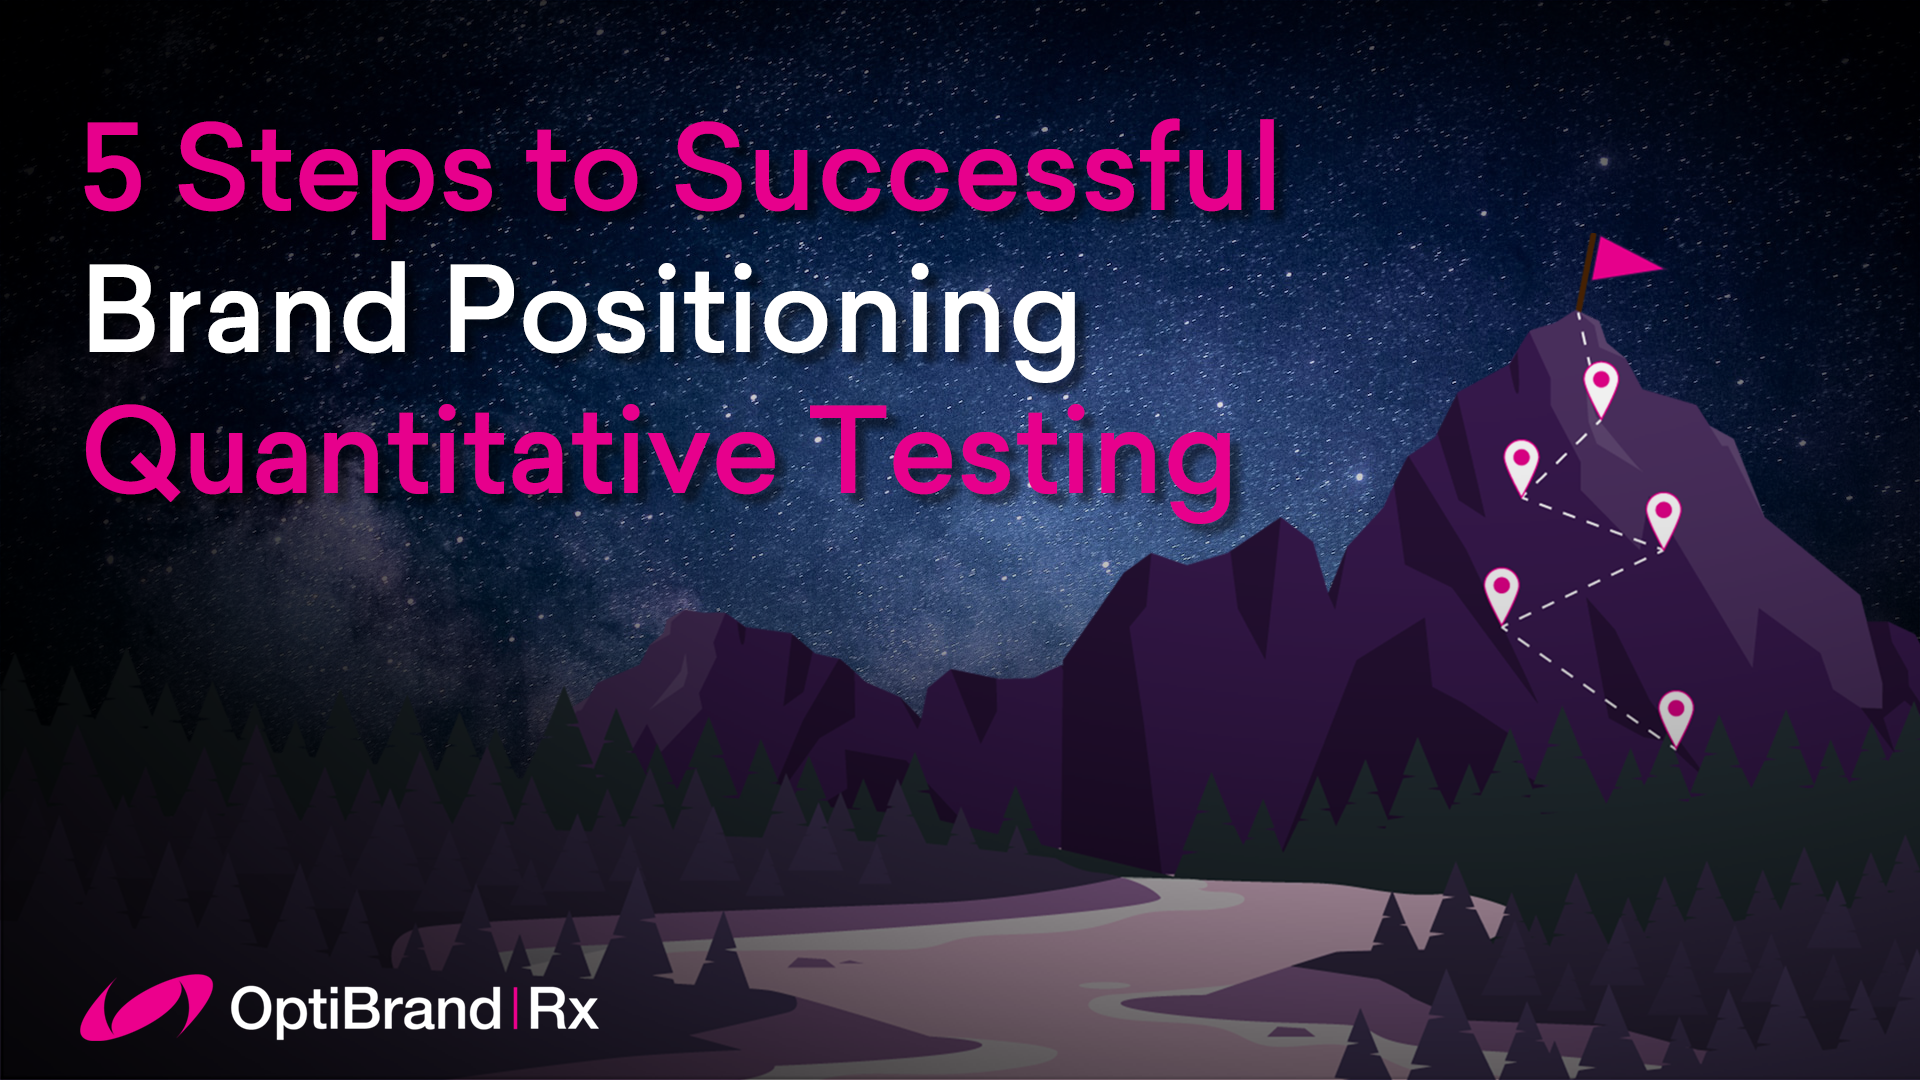 5 Steps to Successful Brand Positioning Quantitative Testing. OptiBrand Rx.